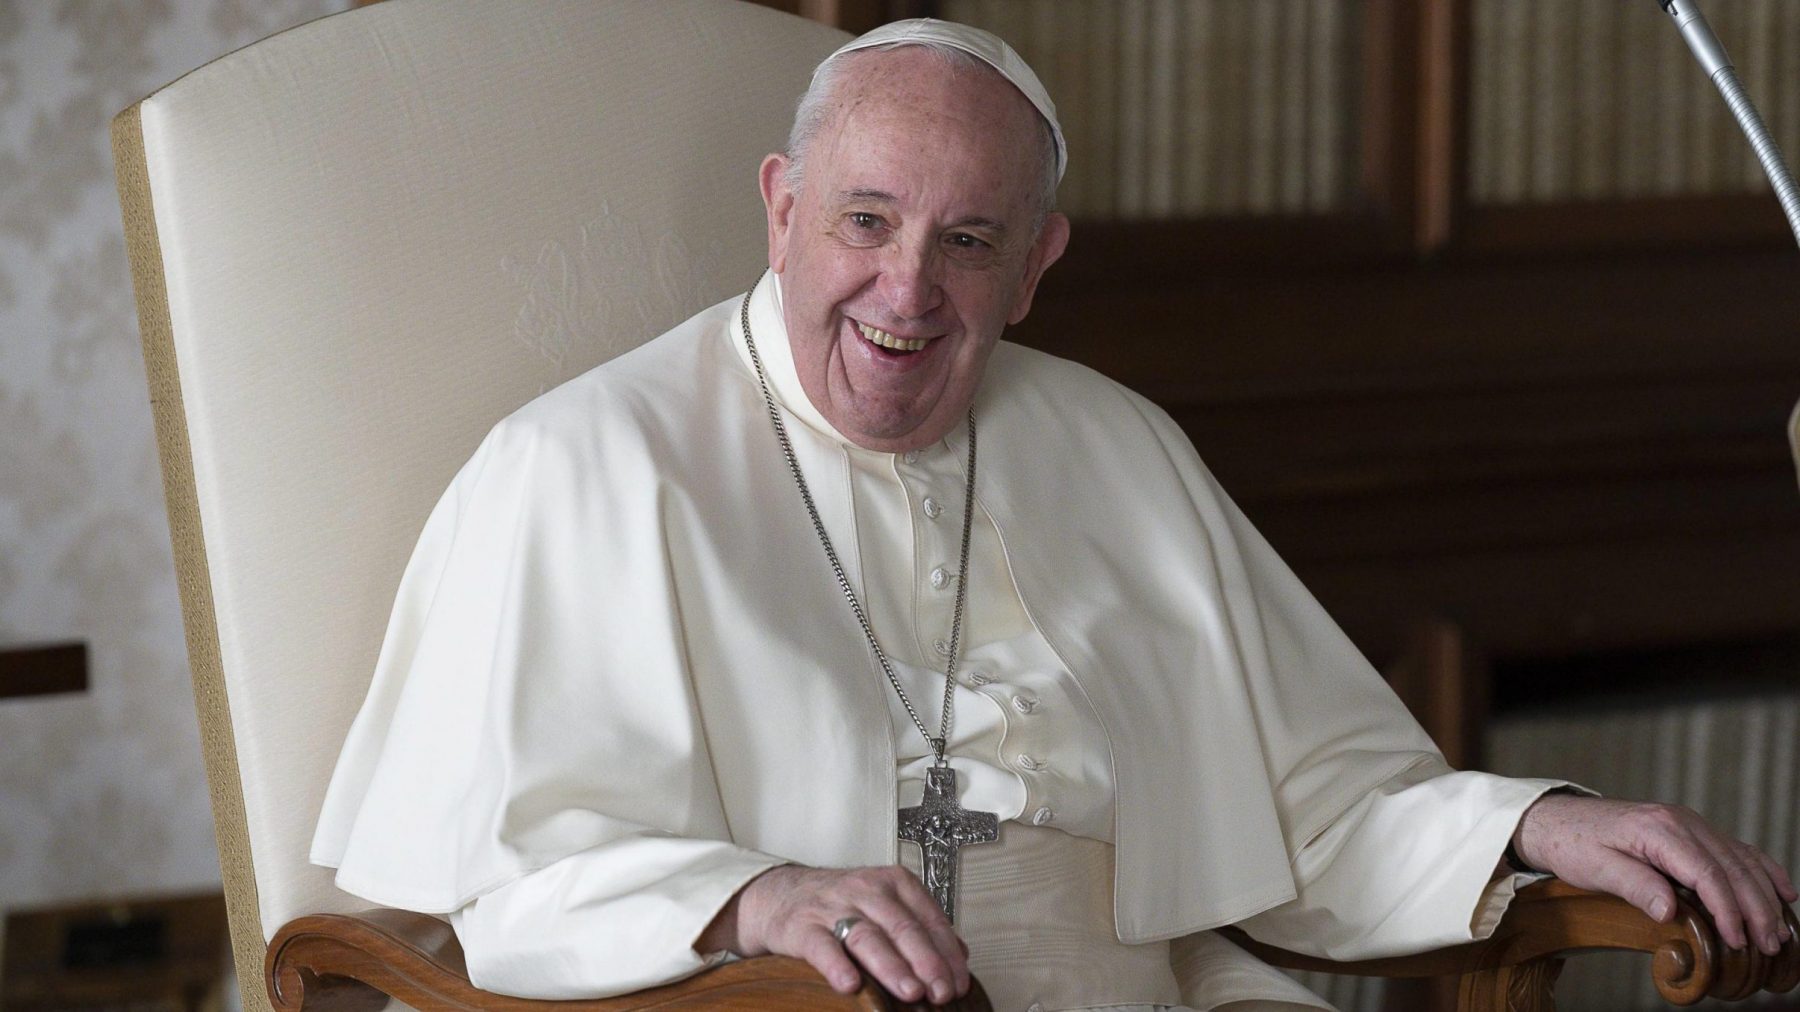 Duimpjes omhoog: paus Franciscus liket pikante billenfoto op Instagram ...